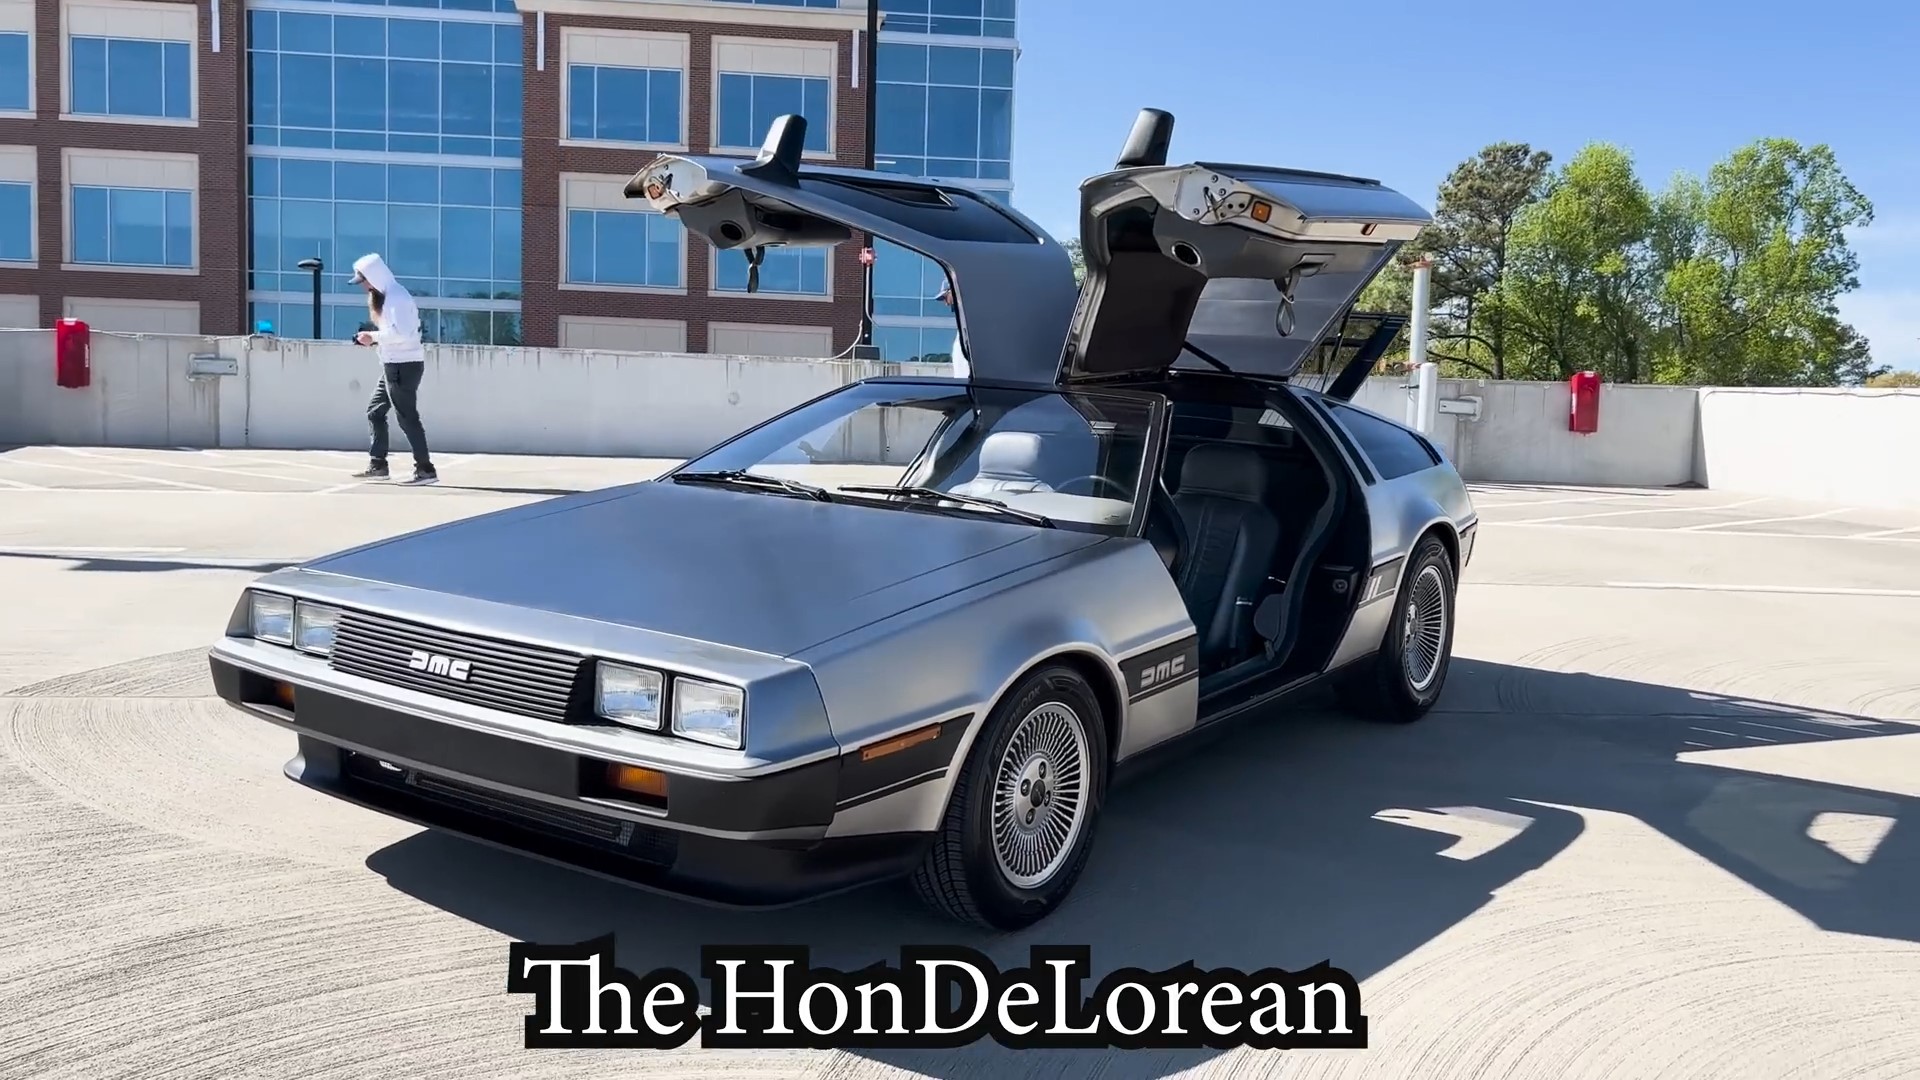 Honda DeLorean